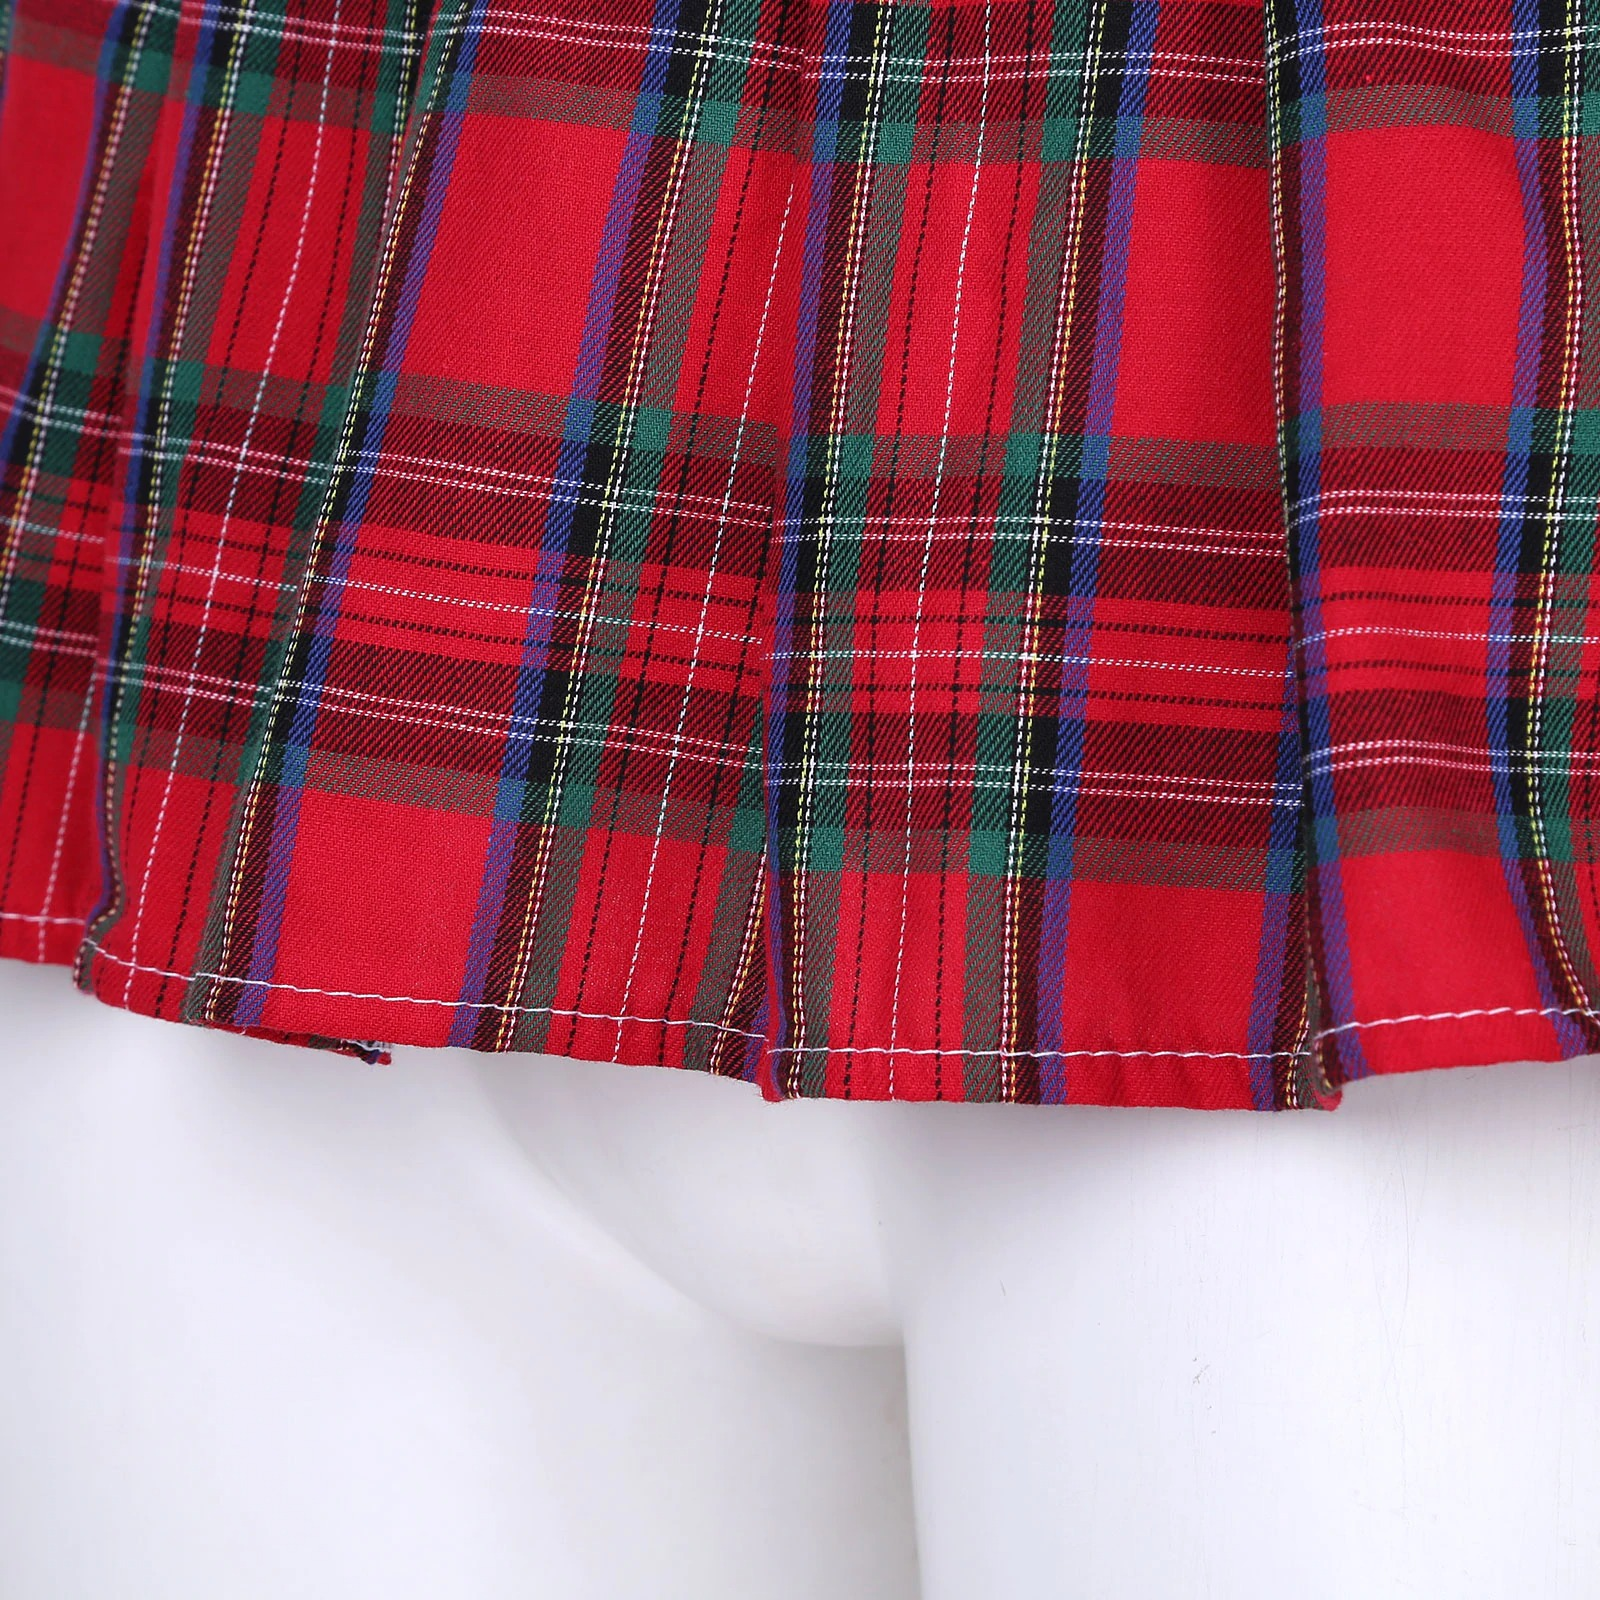 Erotic Women's Plaid Mini Skirt of Ruffle / Hot Female Miniskirts - HARD'N'HEAVY